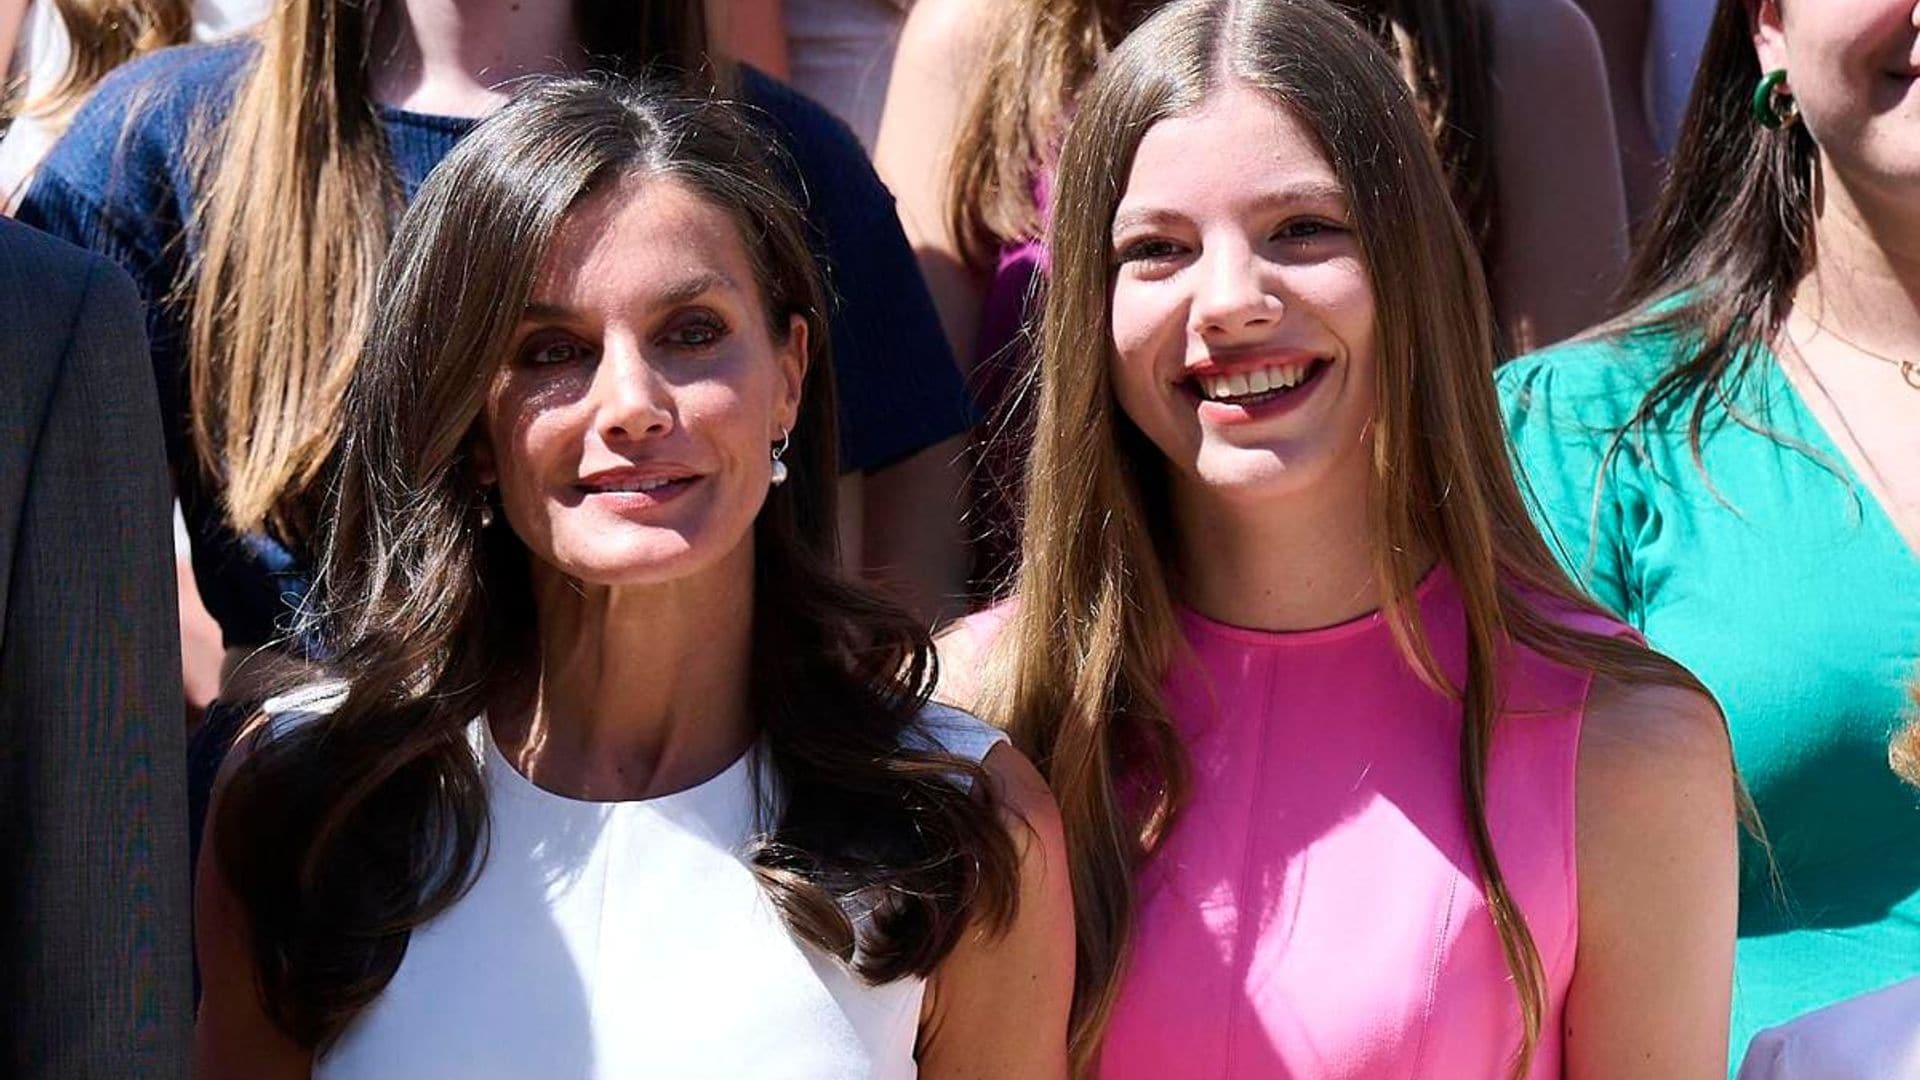 Queen Letizia’s daughter Sofia embraces Barbiecore trend